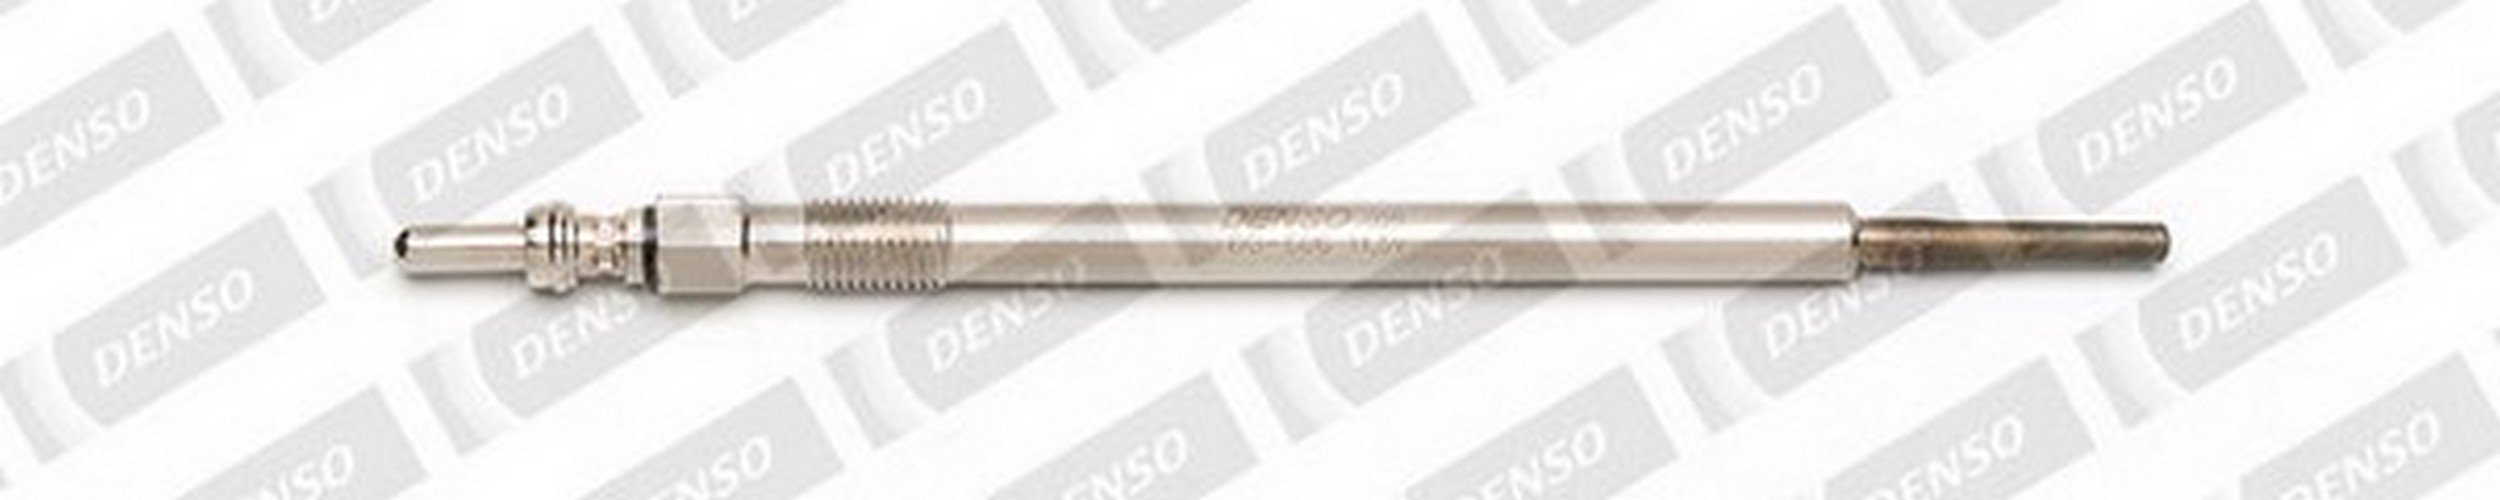 DENSO-AU DG-606